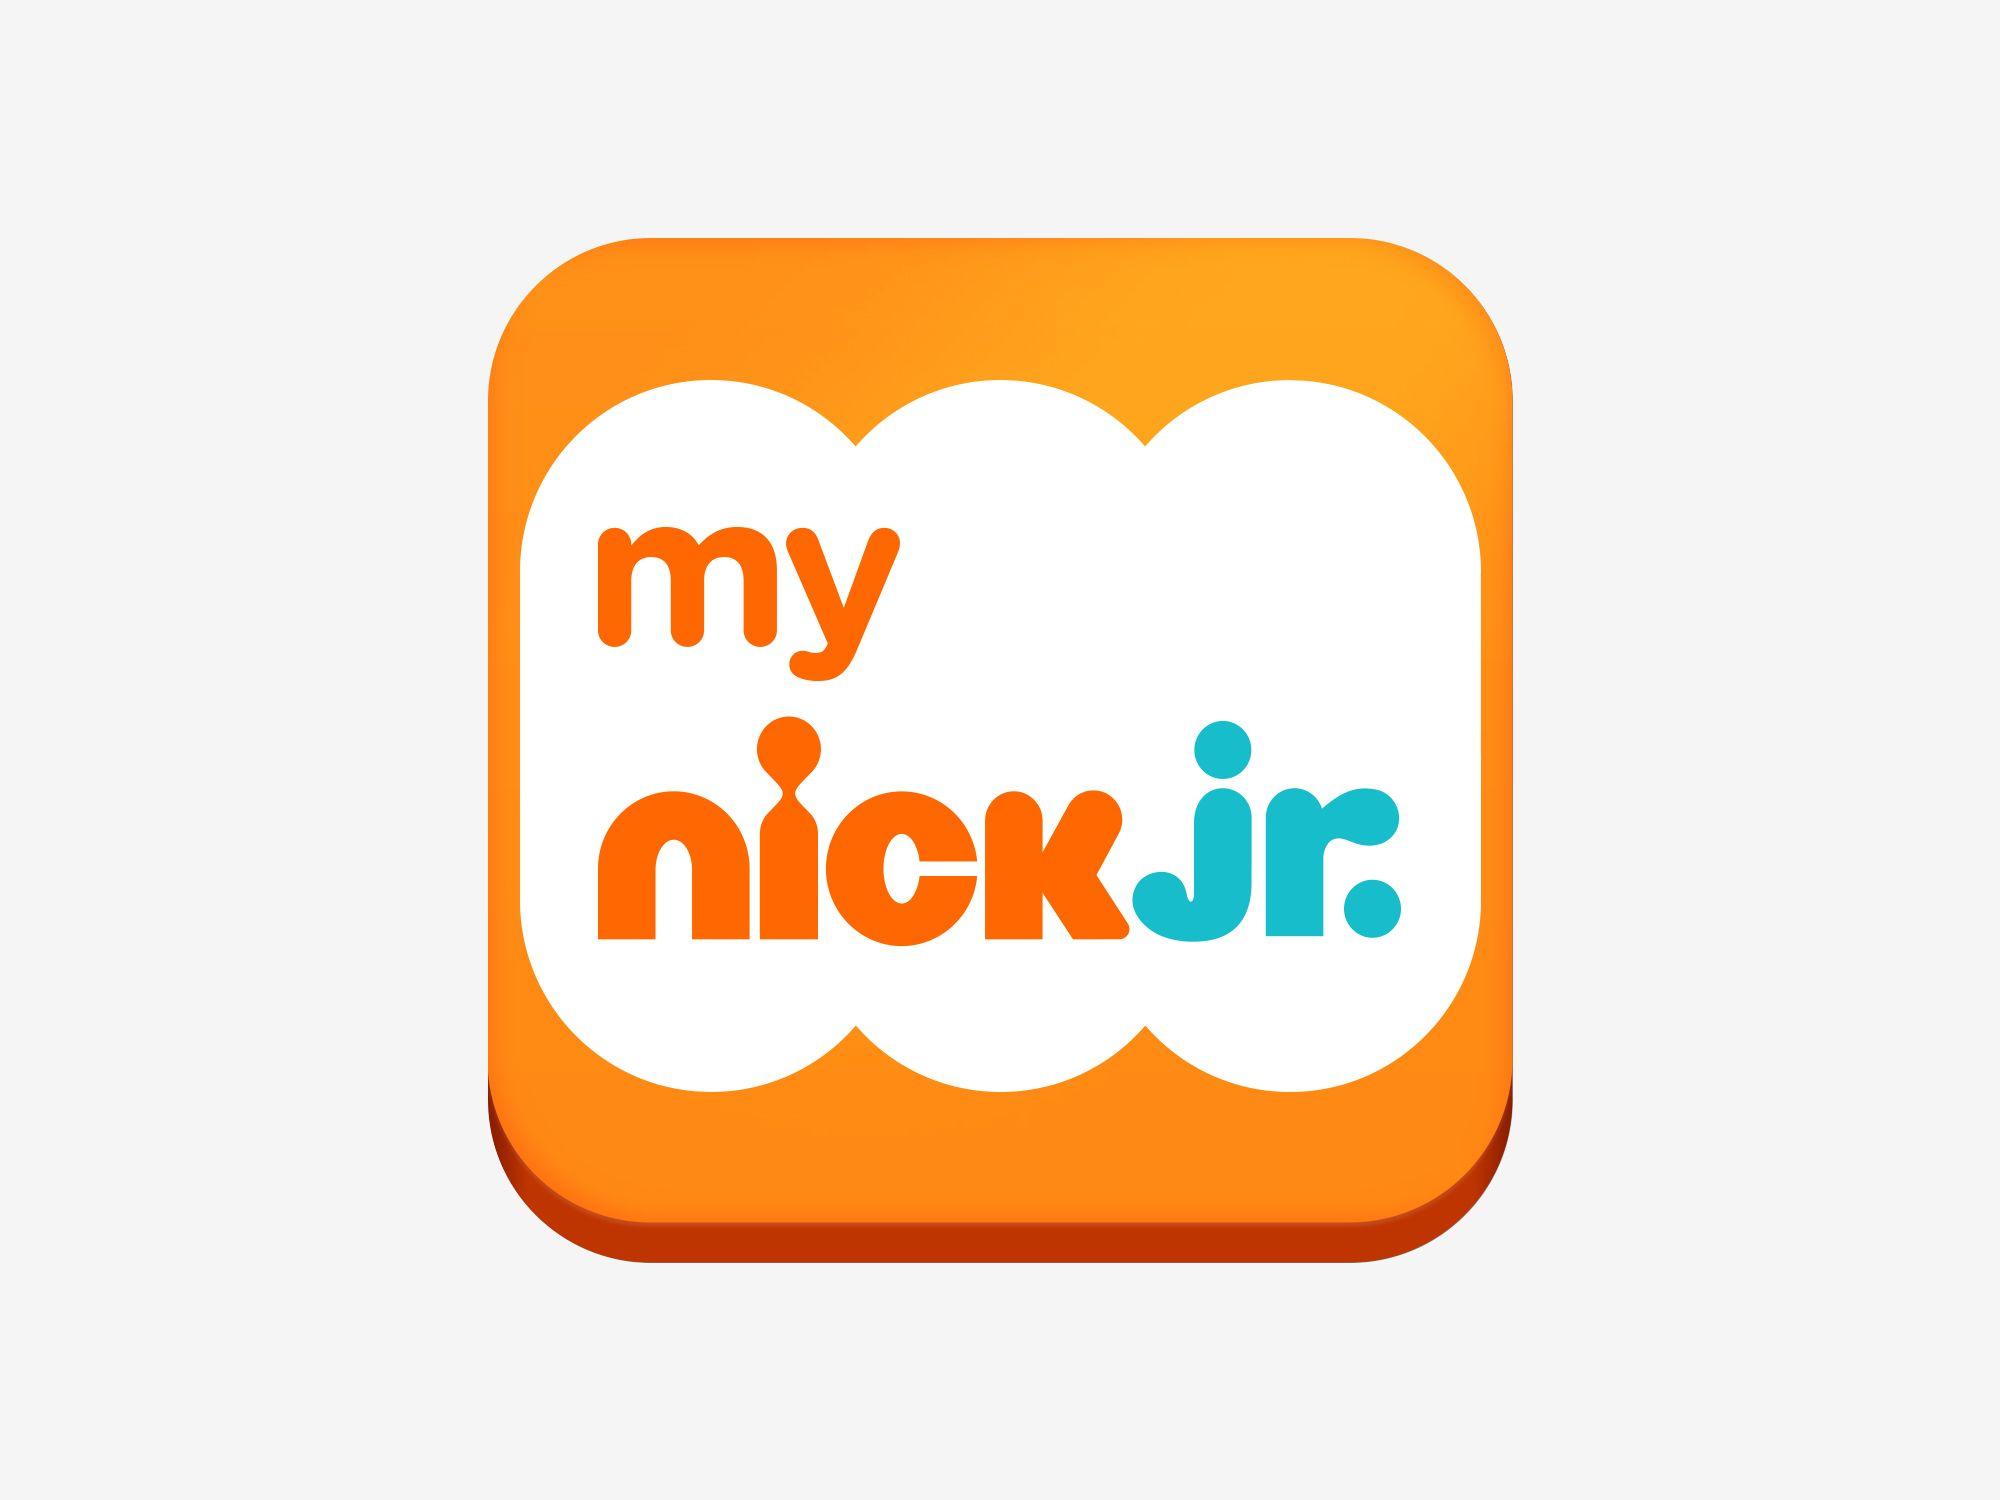 Nick.com Logo - My Nick Jr. Logo by Soo Yun Kim | Dribbble | Dribbble